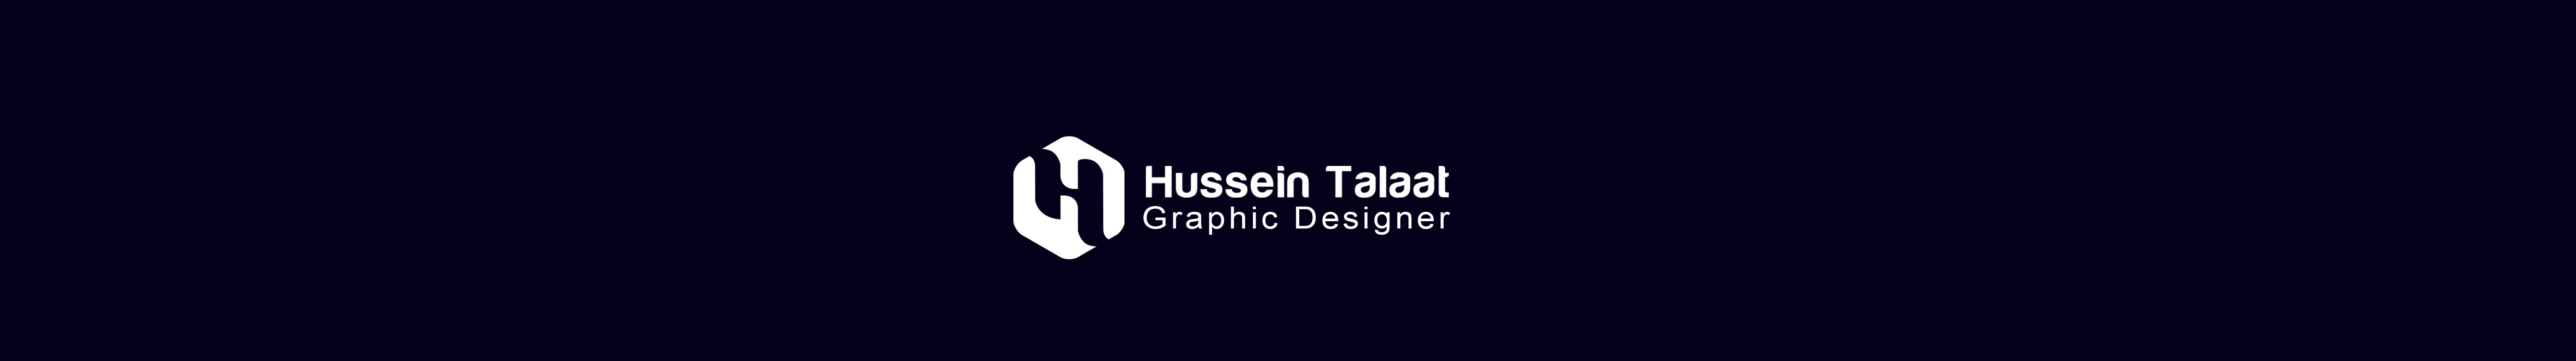 Hussein Talaat profil başlığı